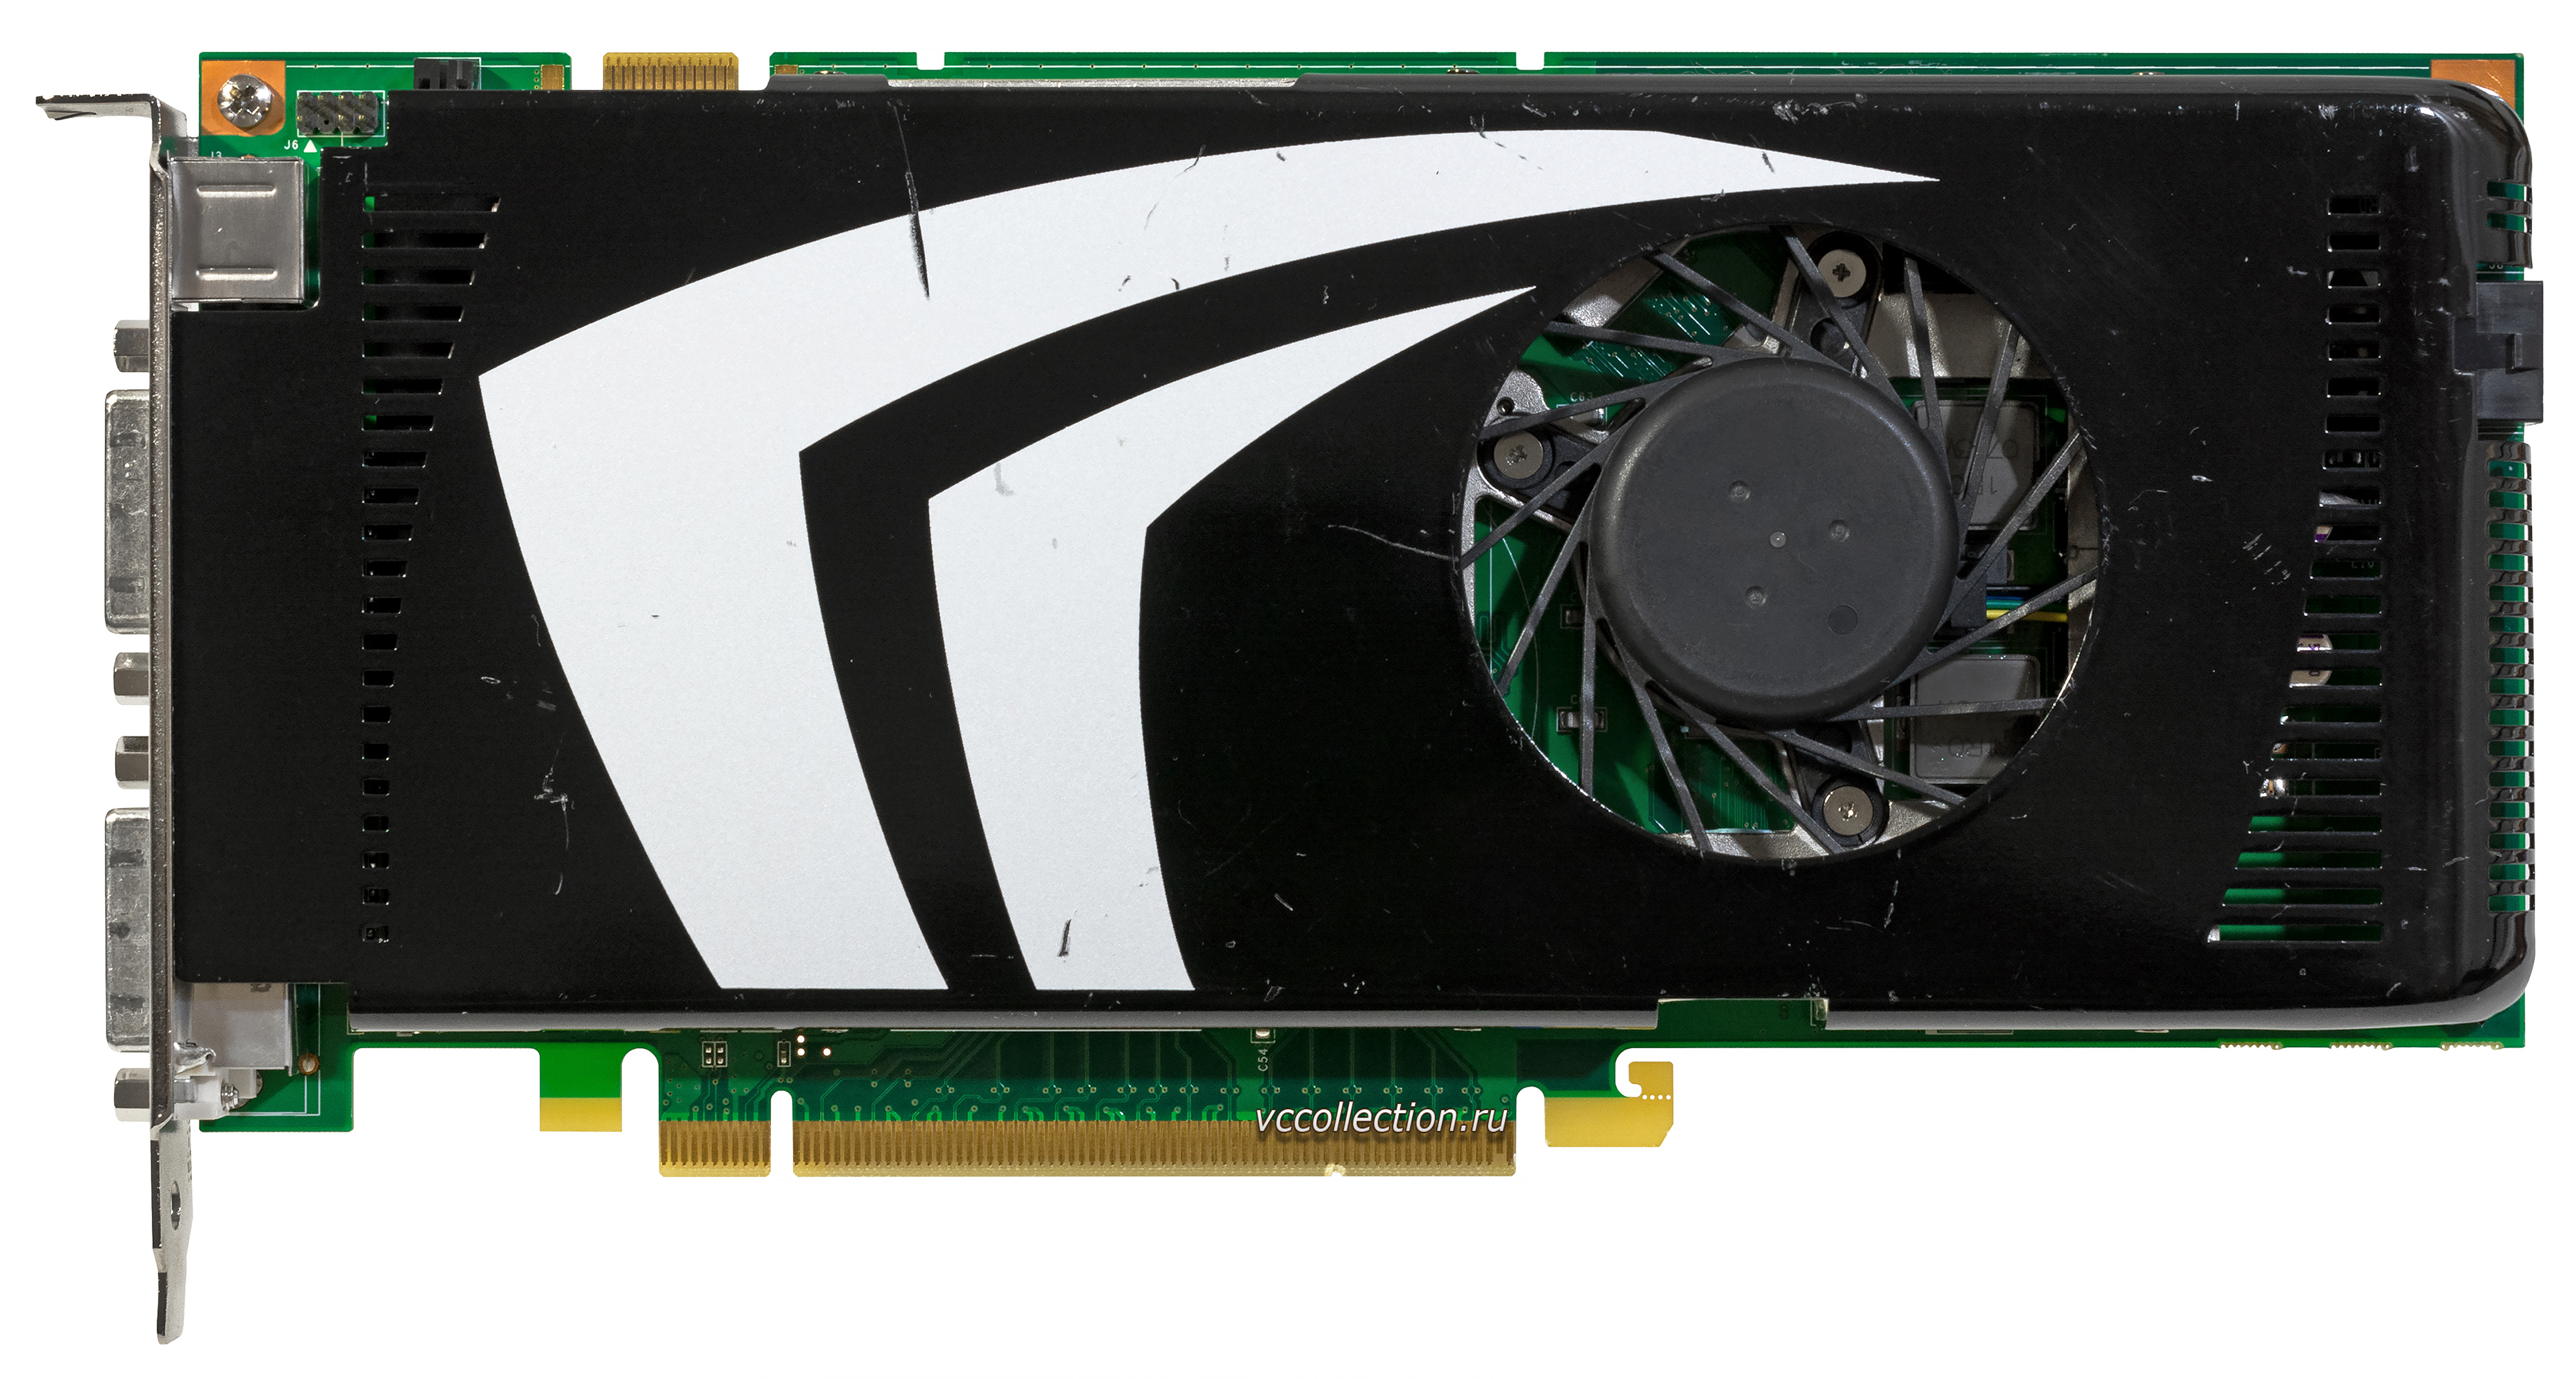 NVidia GeForce 9600 GT ES